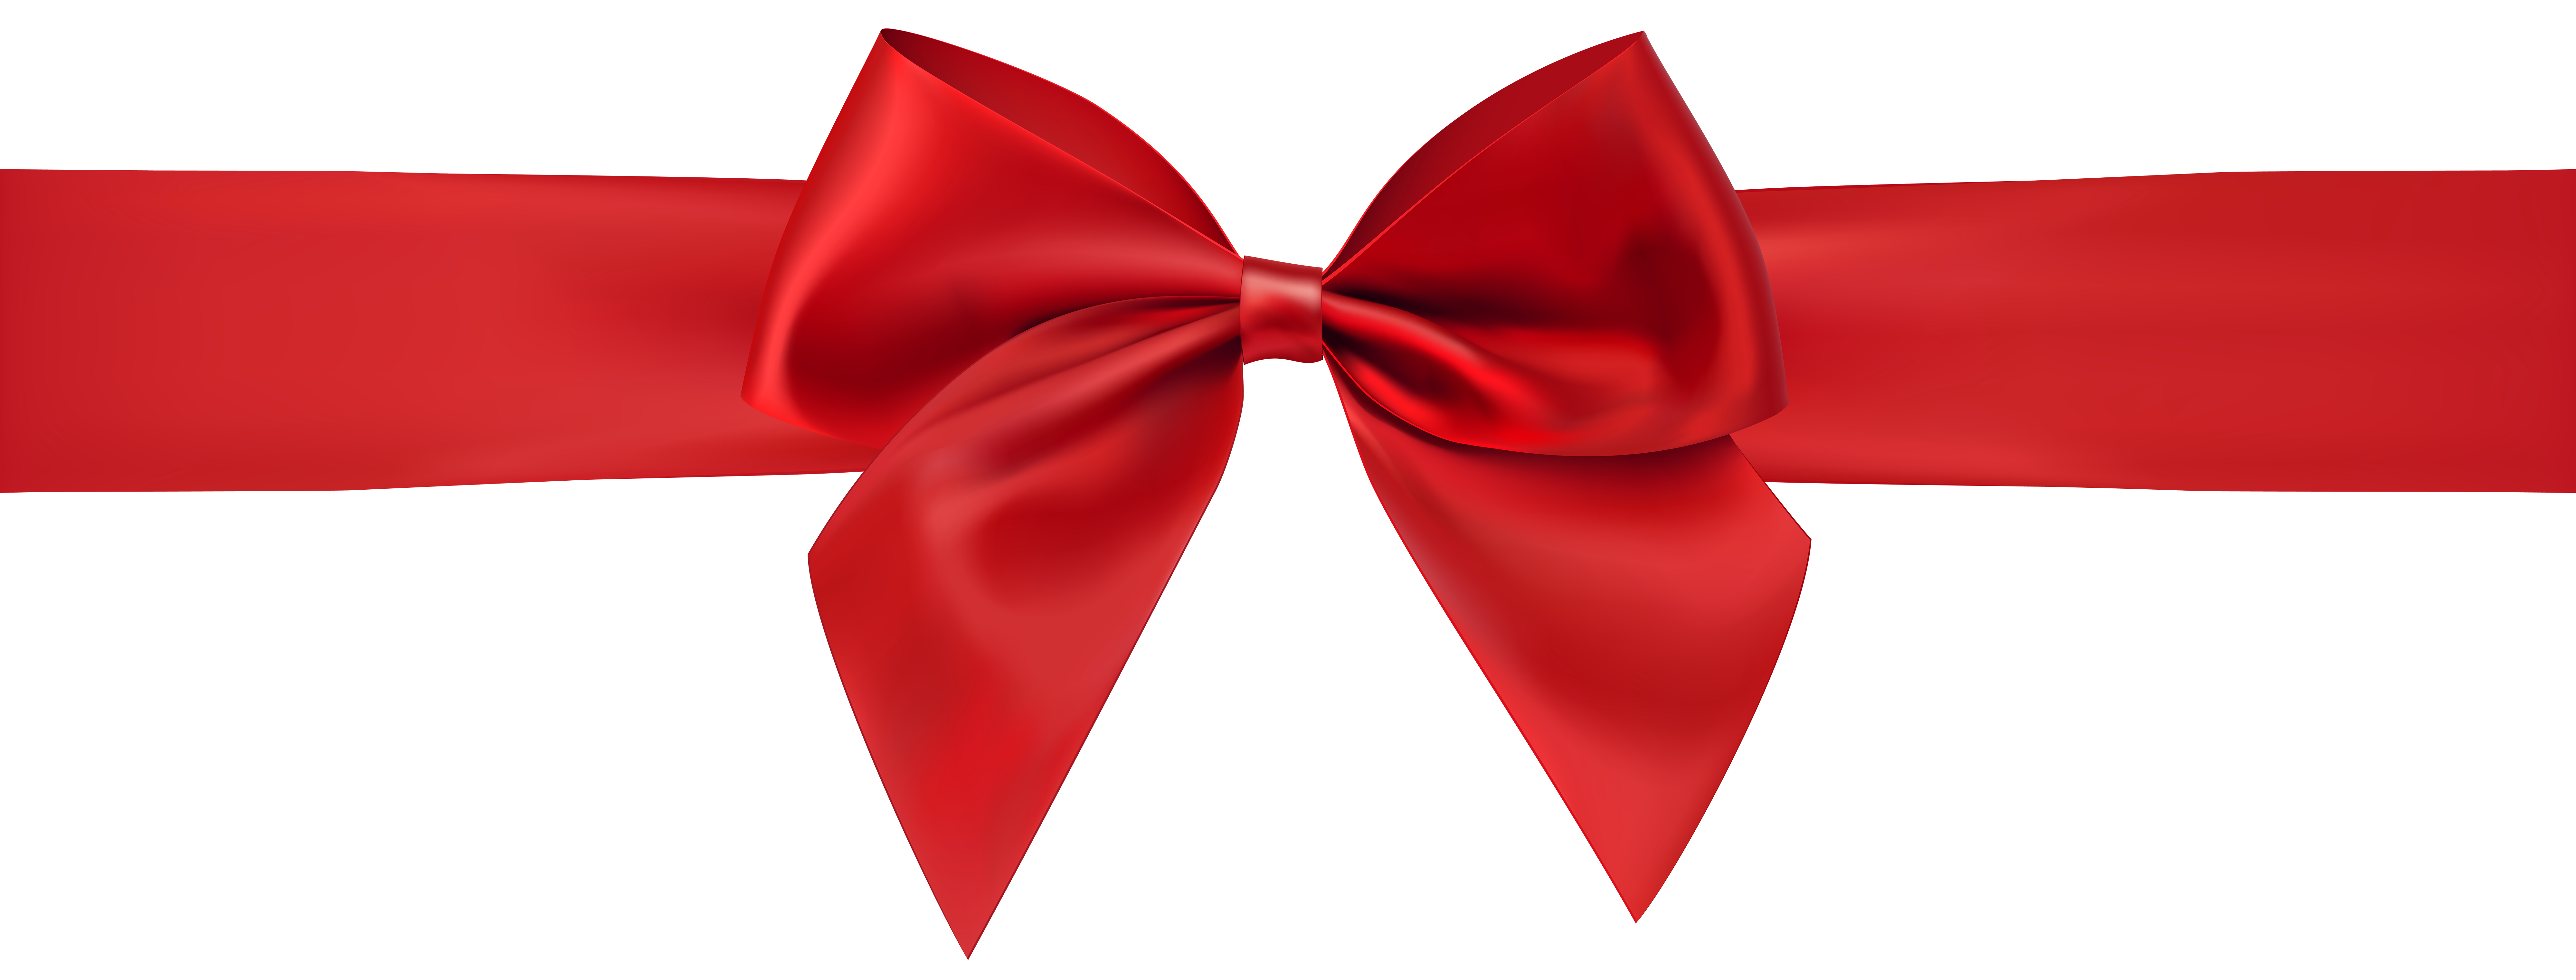 red bow decoration transparent png clip art image #28538